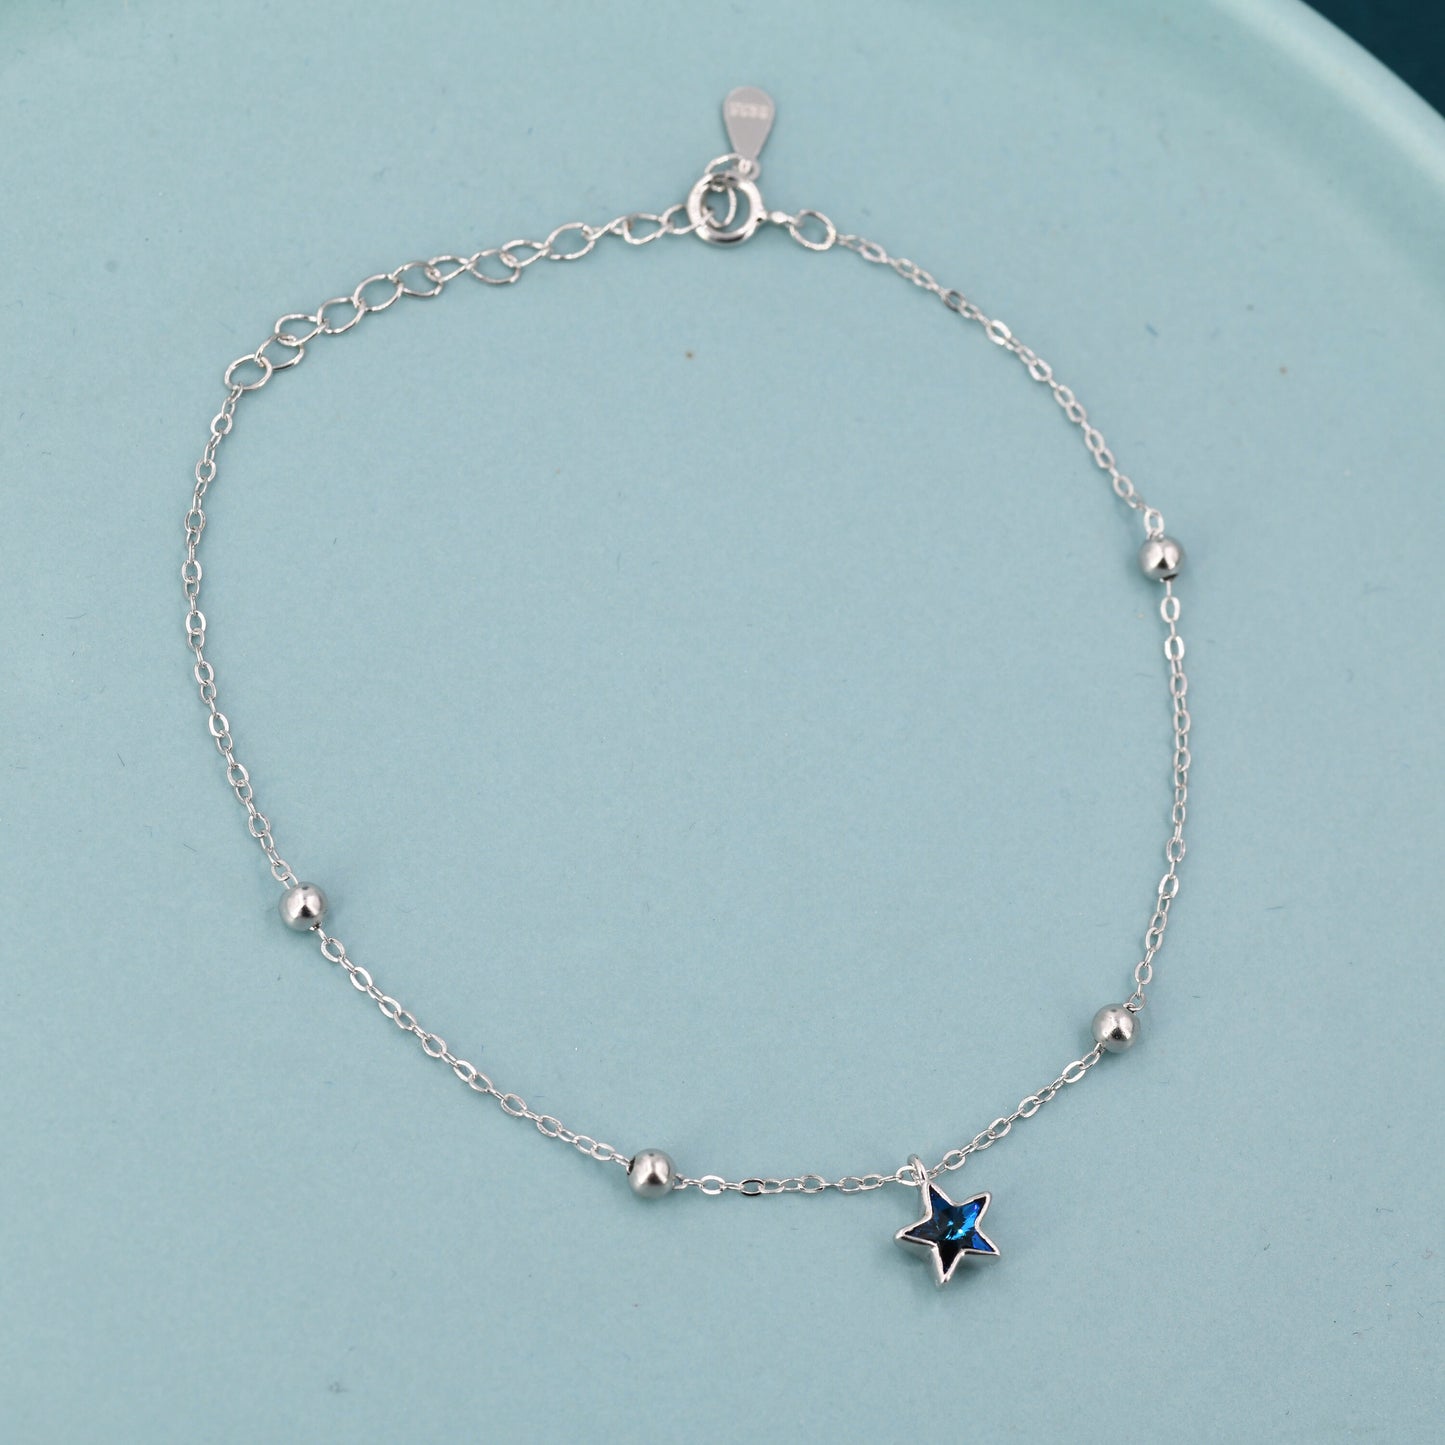 Blue CZ Star Charm Bracelet in Sterling Silver, North Star Dangle Bracelet, Sunburst Bracelet, Star Bracelet